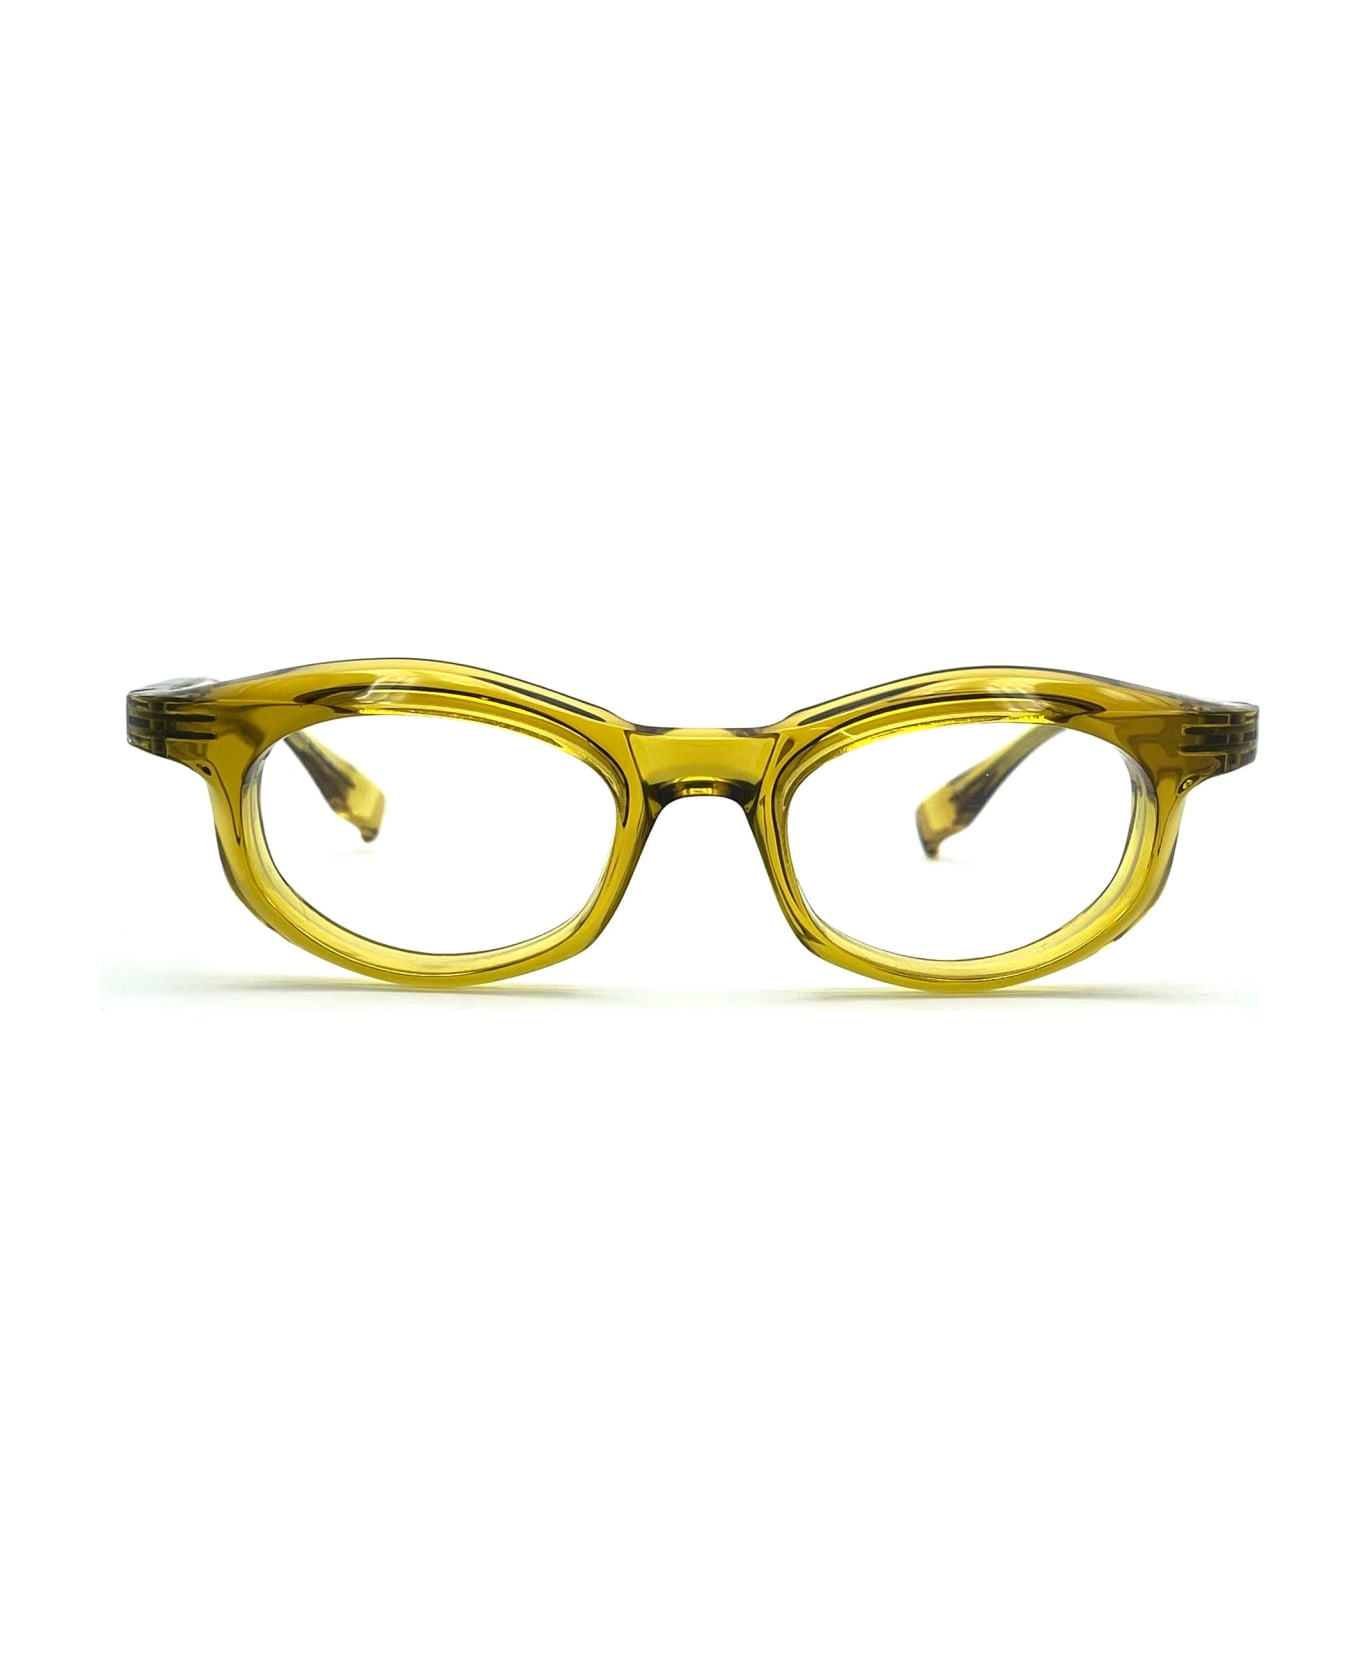 FACTORY900 Rf 043-615 Glasses - yellow trasparent